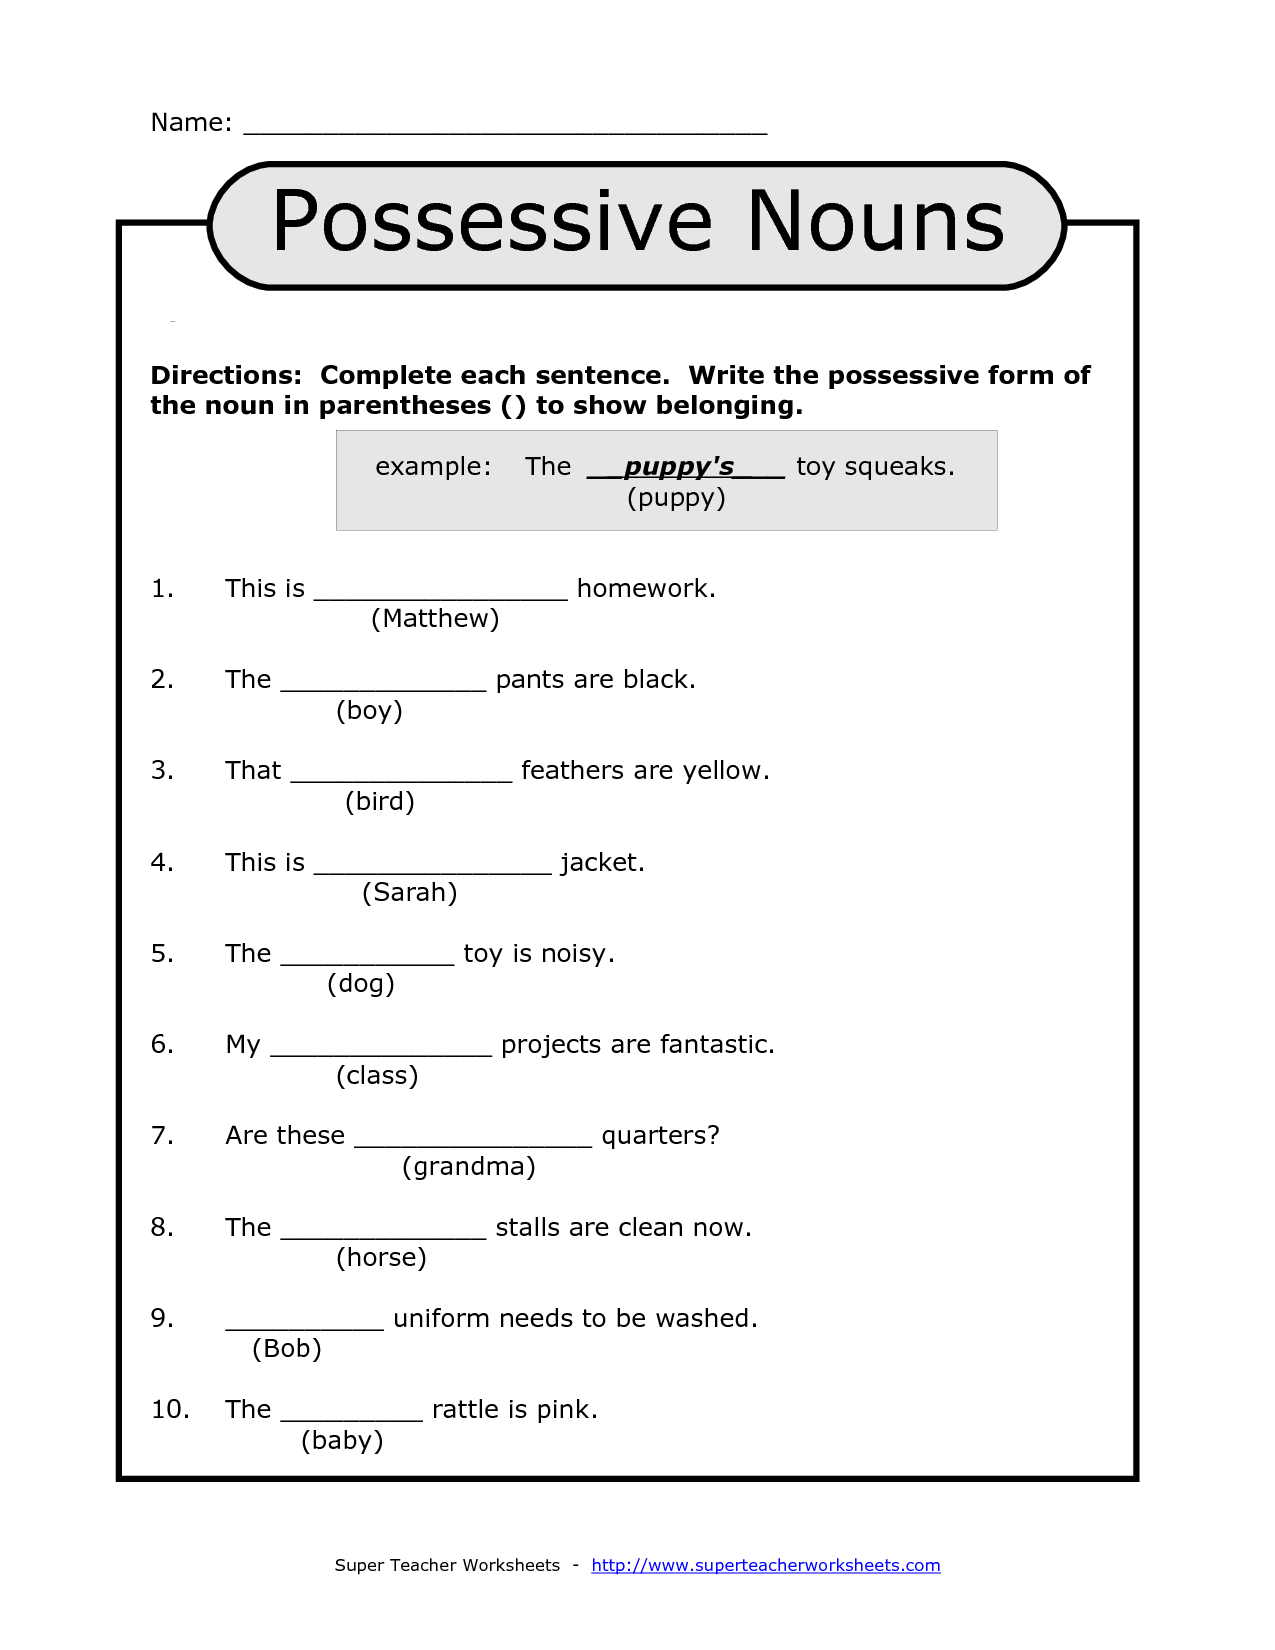 Possessive Pronouns Worksheet For Class 6